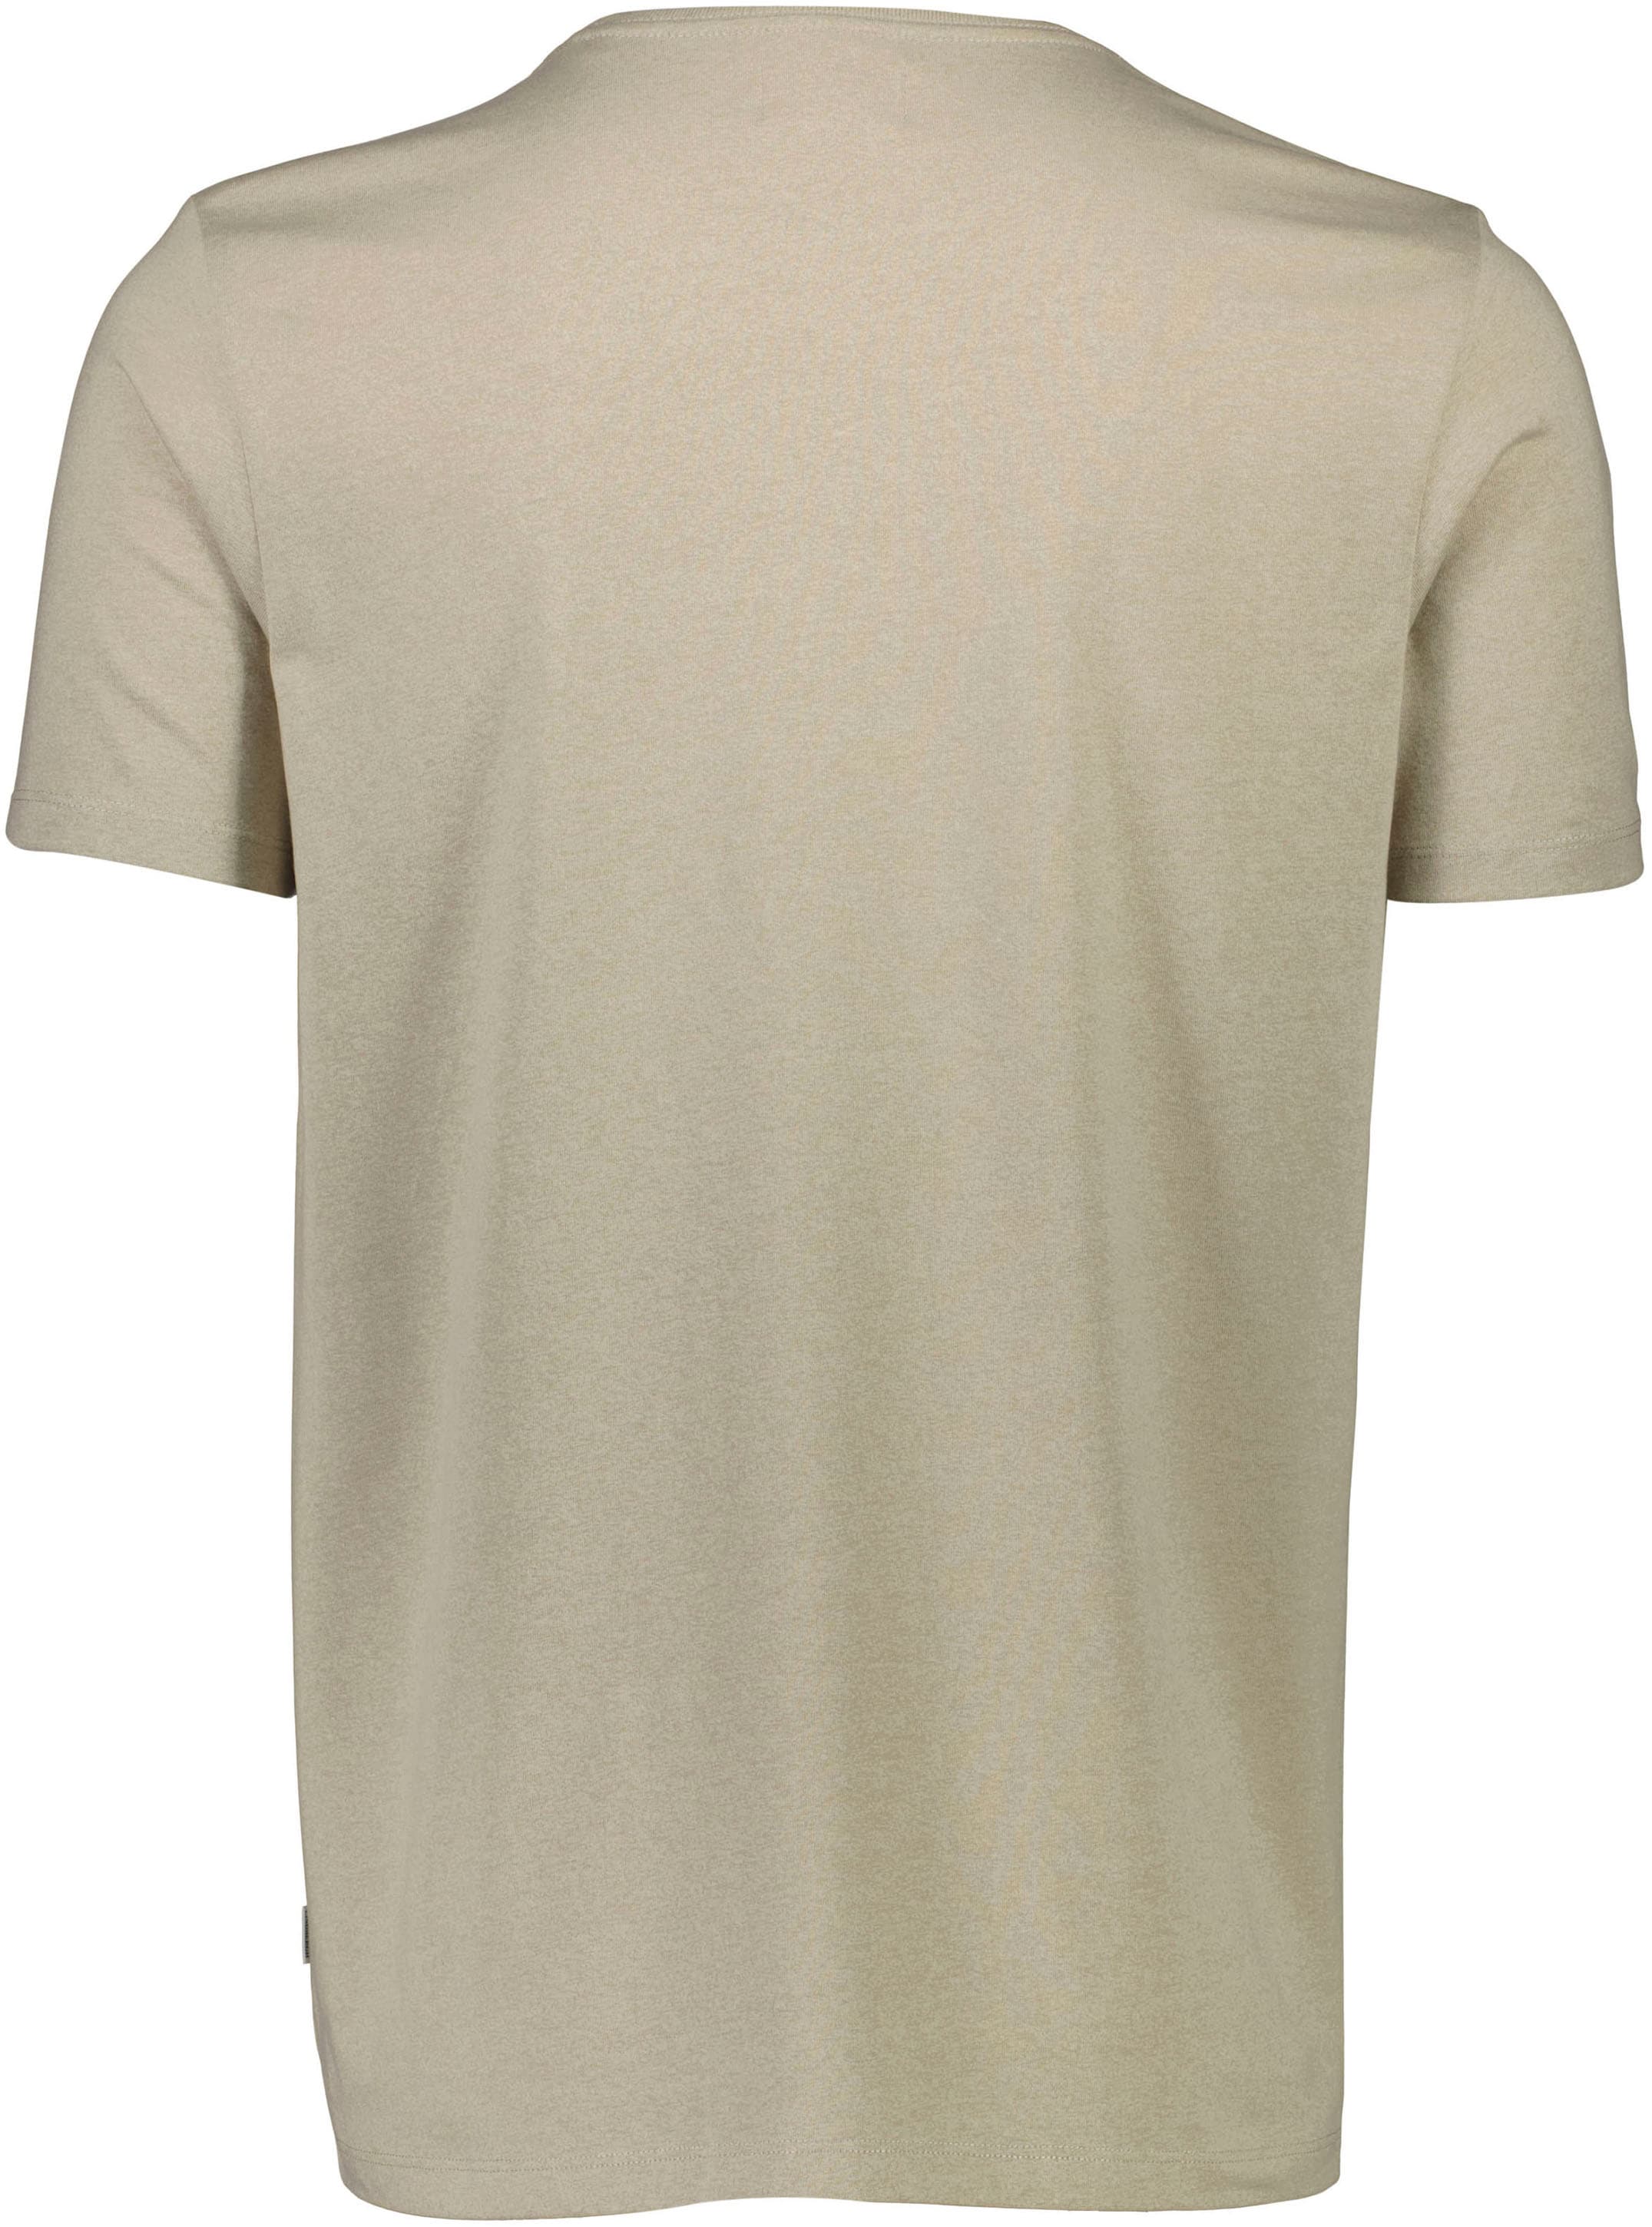 LINDBERGH T-Shirt, mit Rundhalsausschnitt